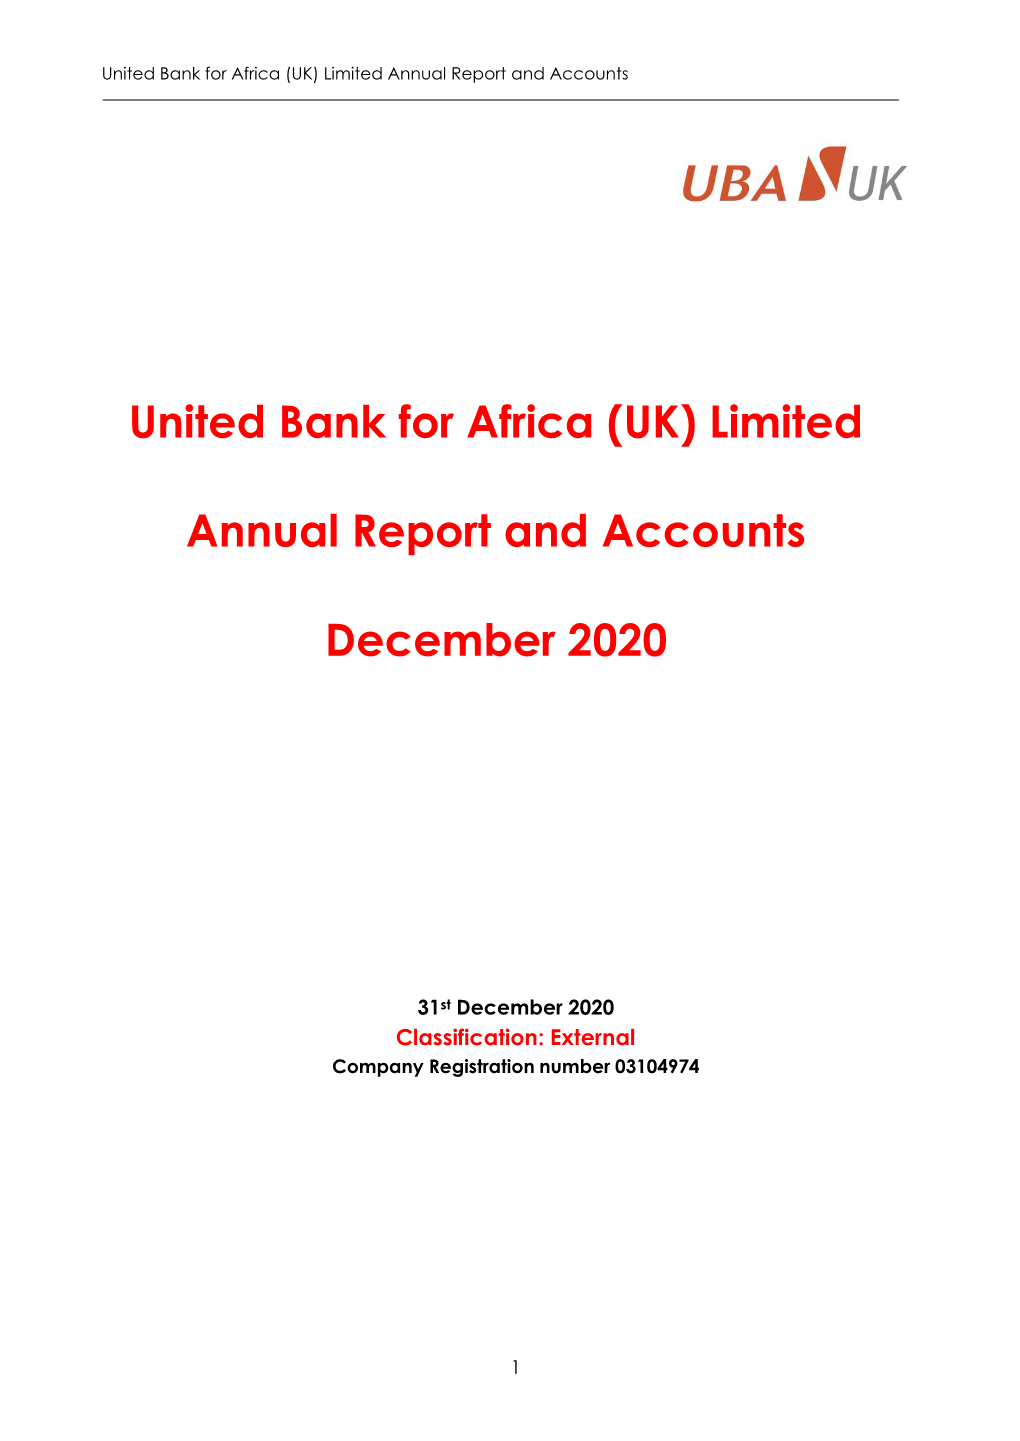 UBA UK Financial Report for 2020